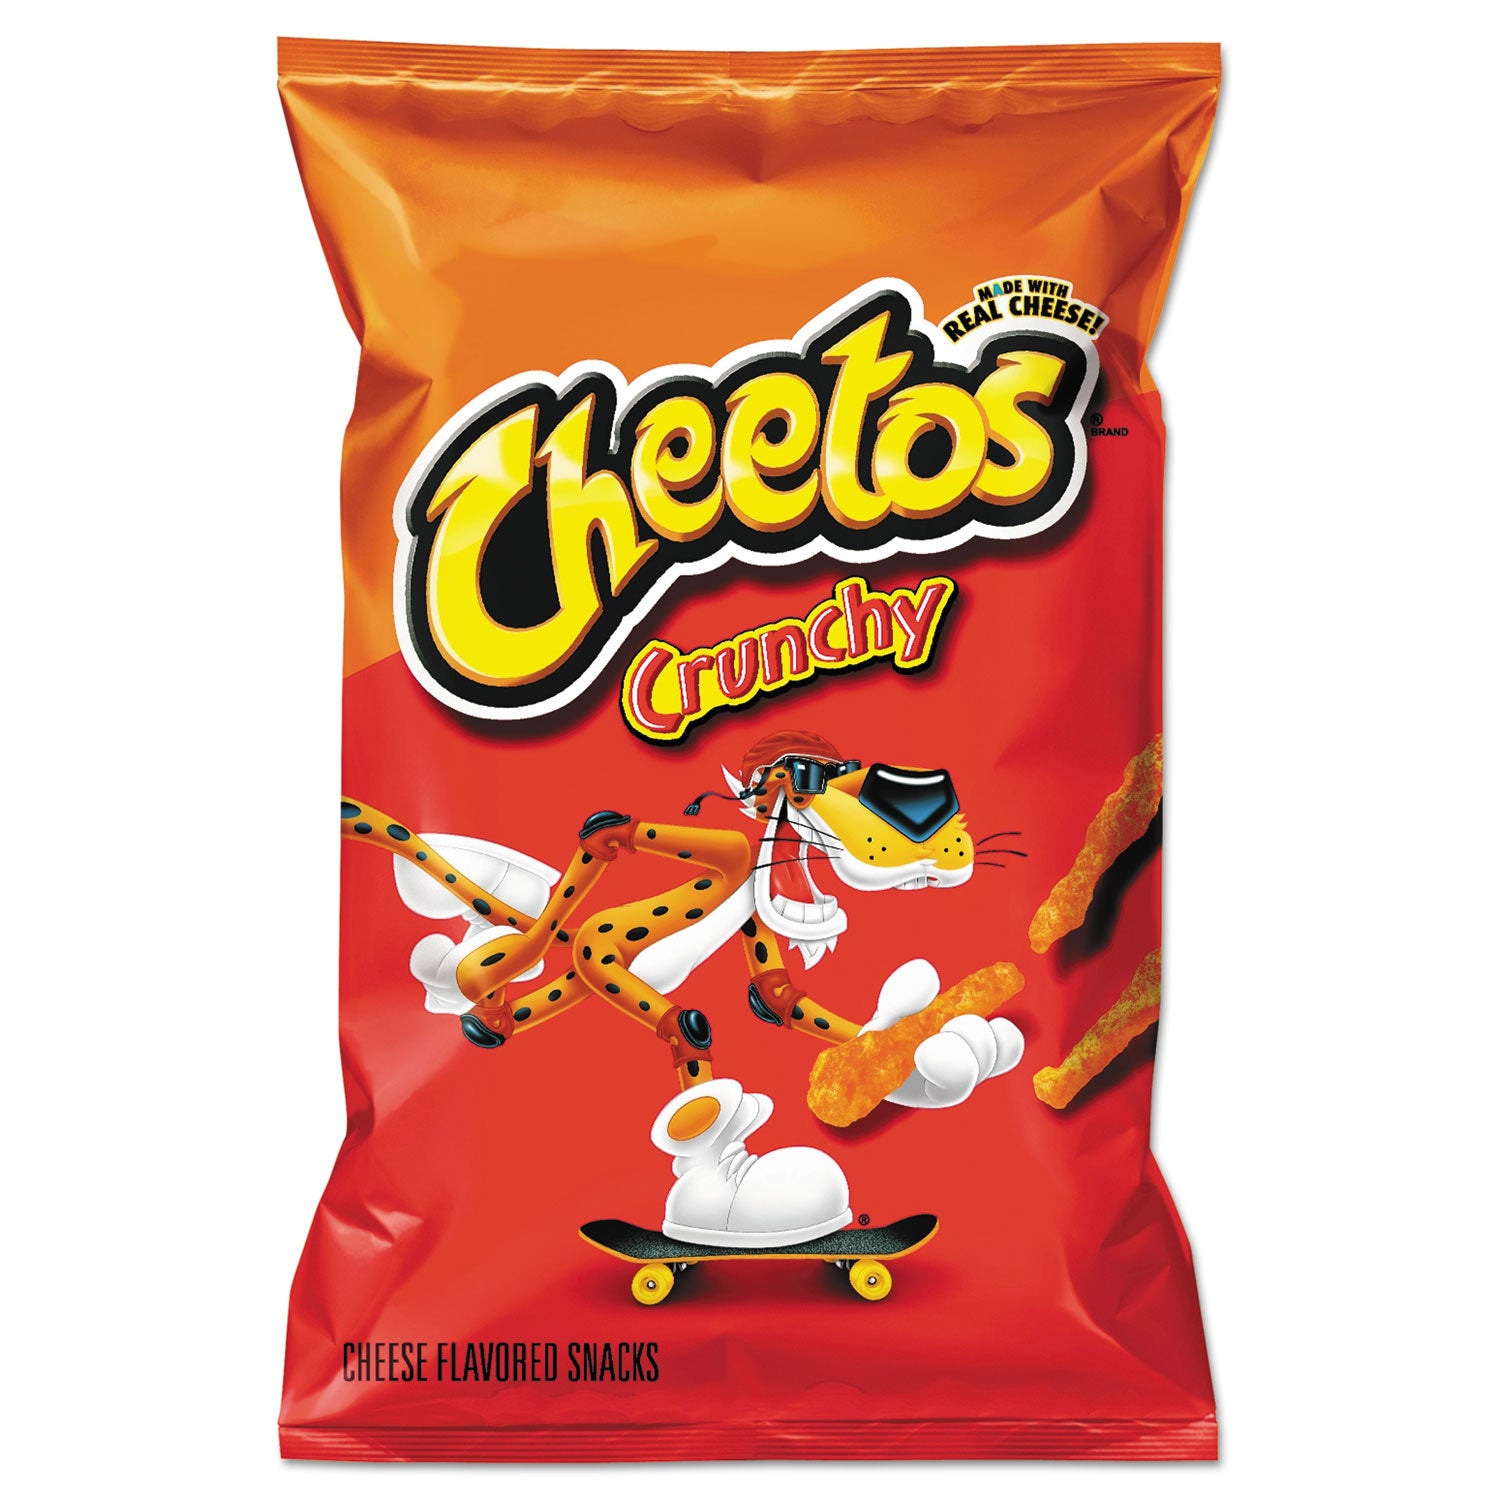 crunchy-cheese-flavored-snacks-2-oz-bag-64-carton_lay44366 - 1